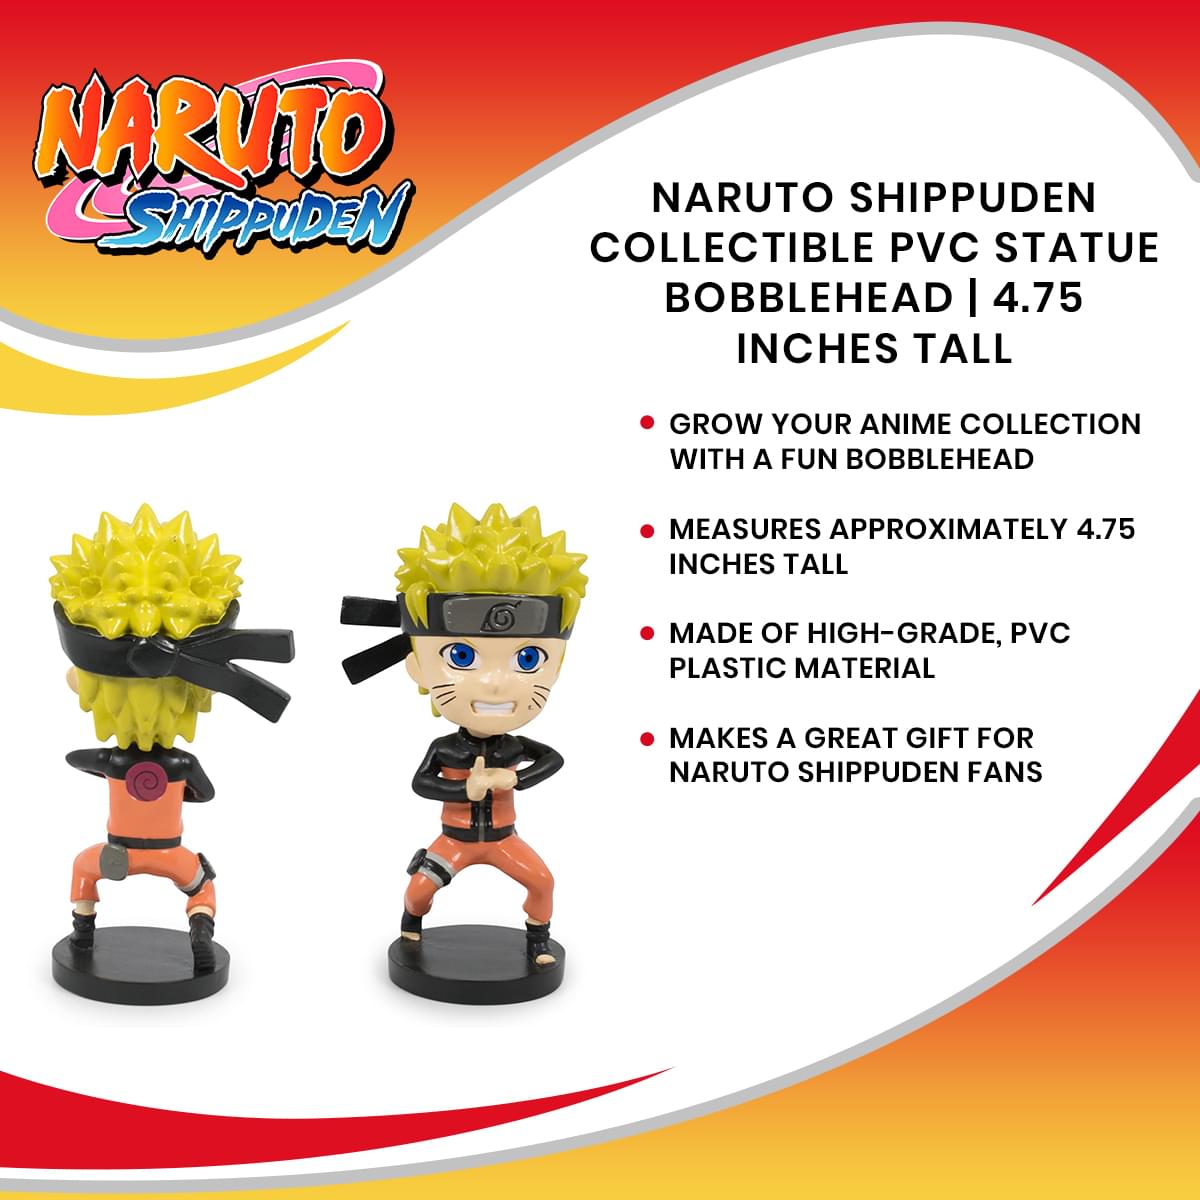 Naruto Shippuden Collectible PVC Statue Bobblehead | 4.75 Inches Tall